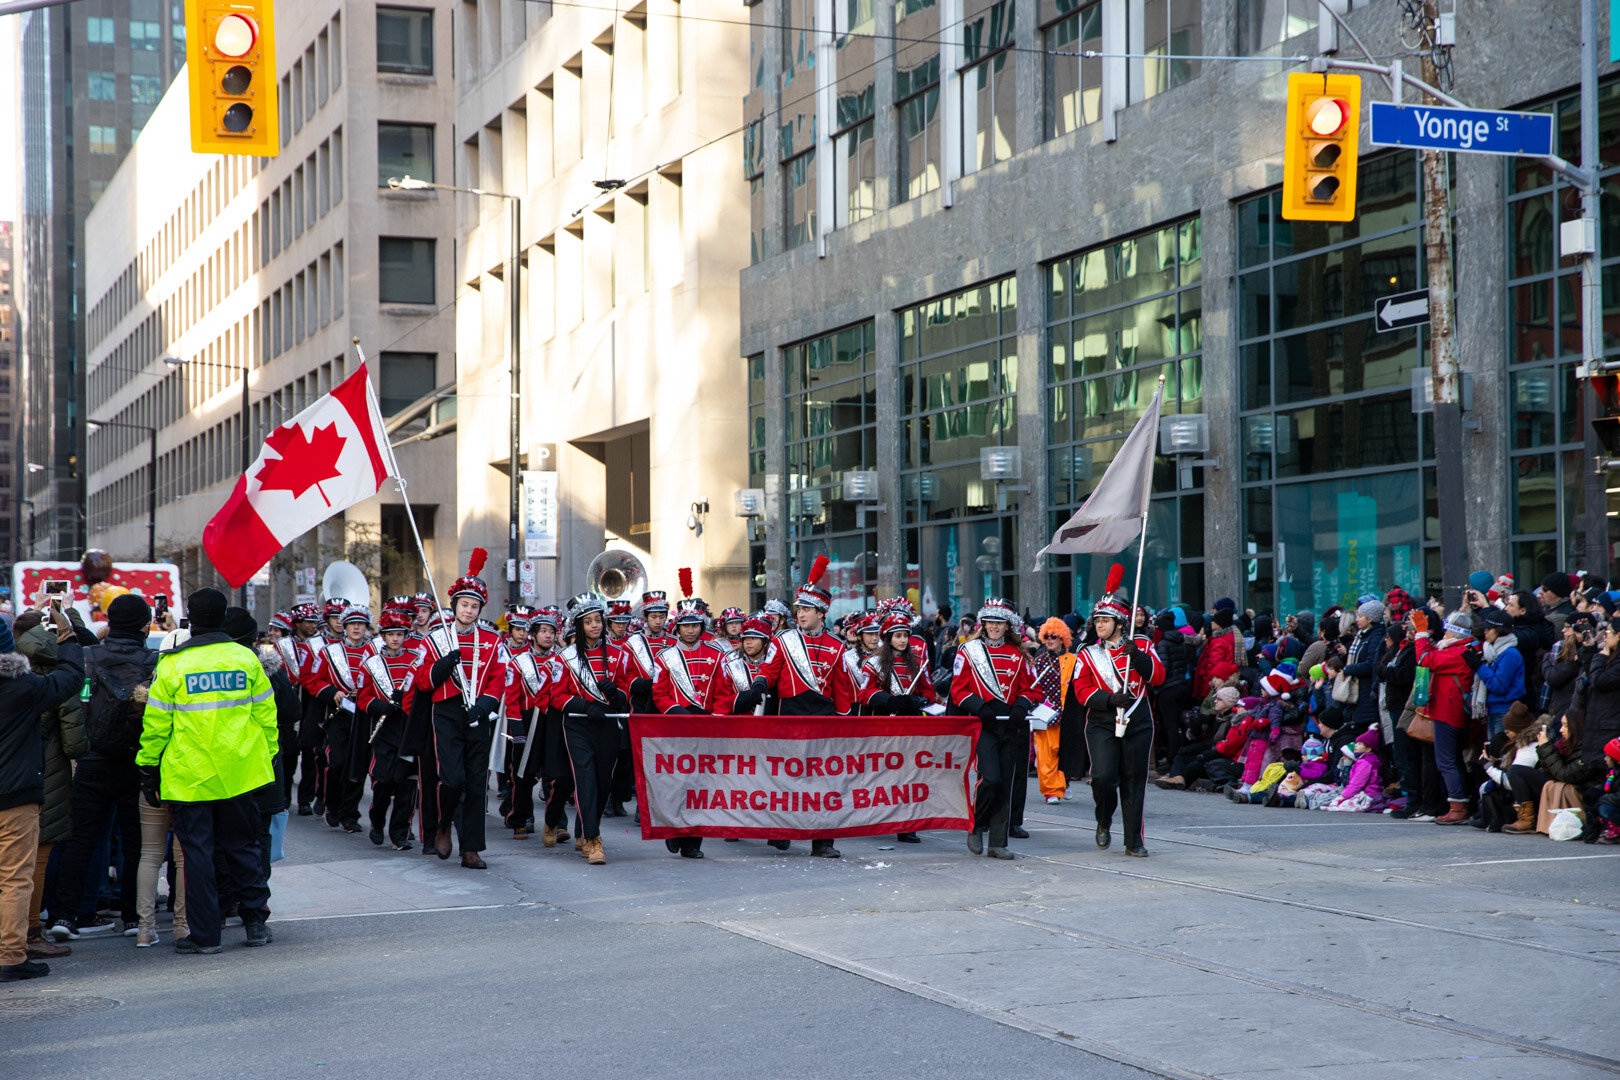 North Toronto C.I. Marching Band 